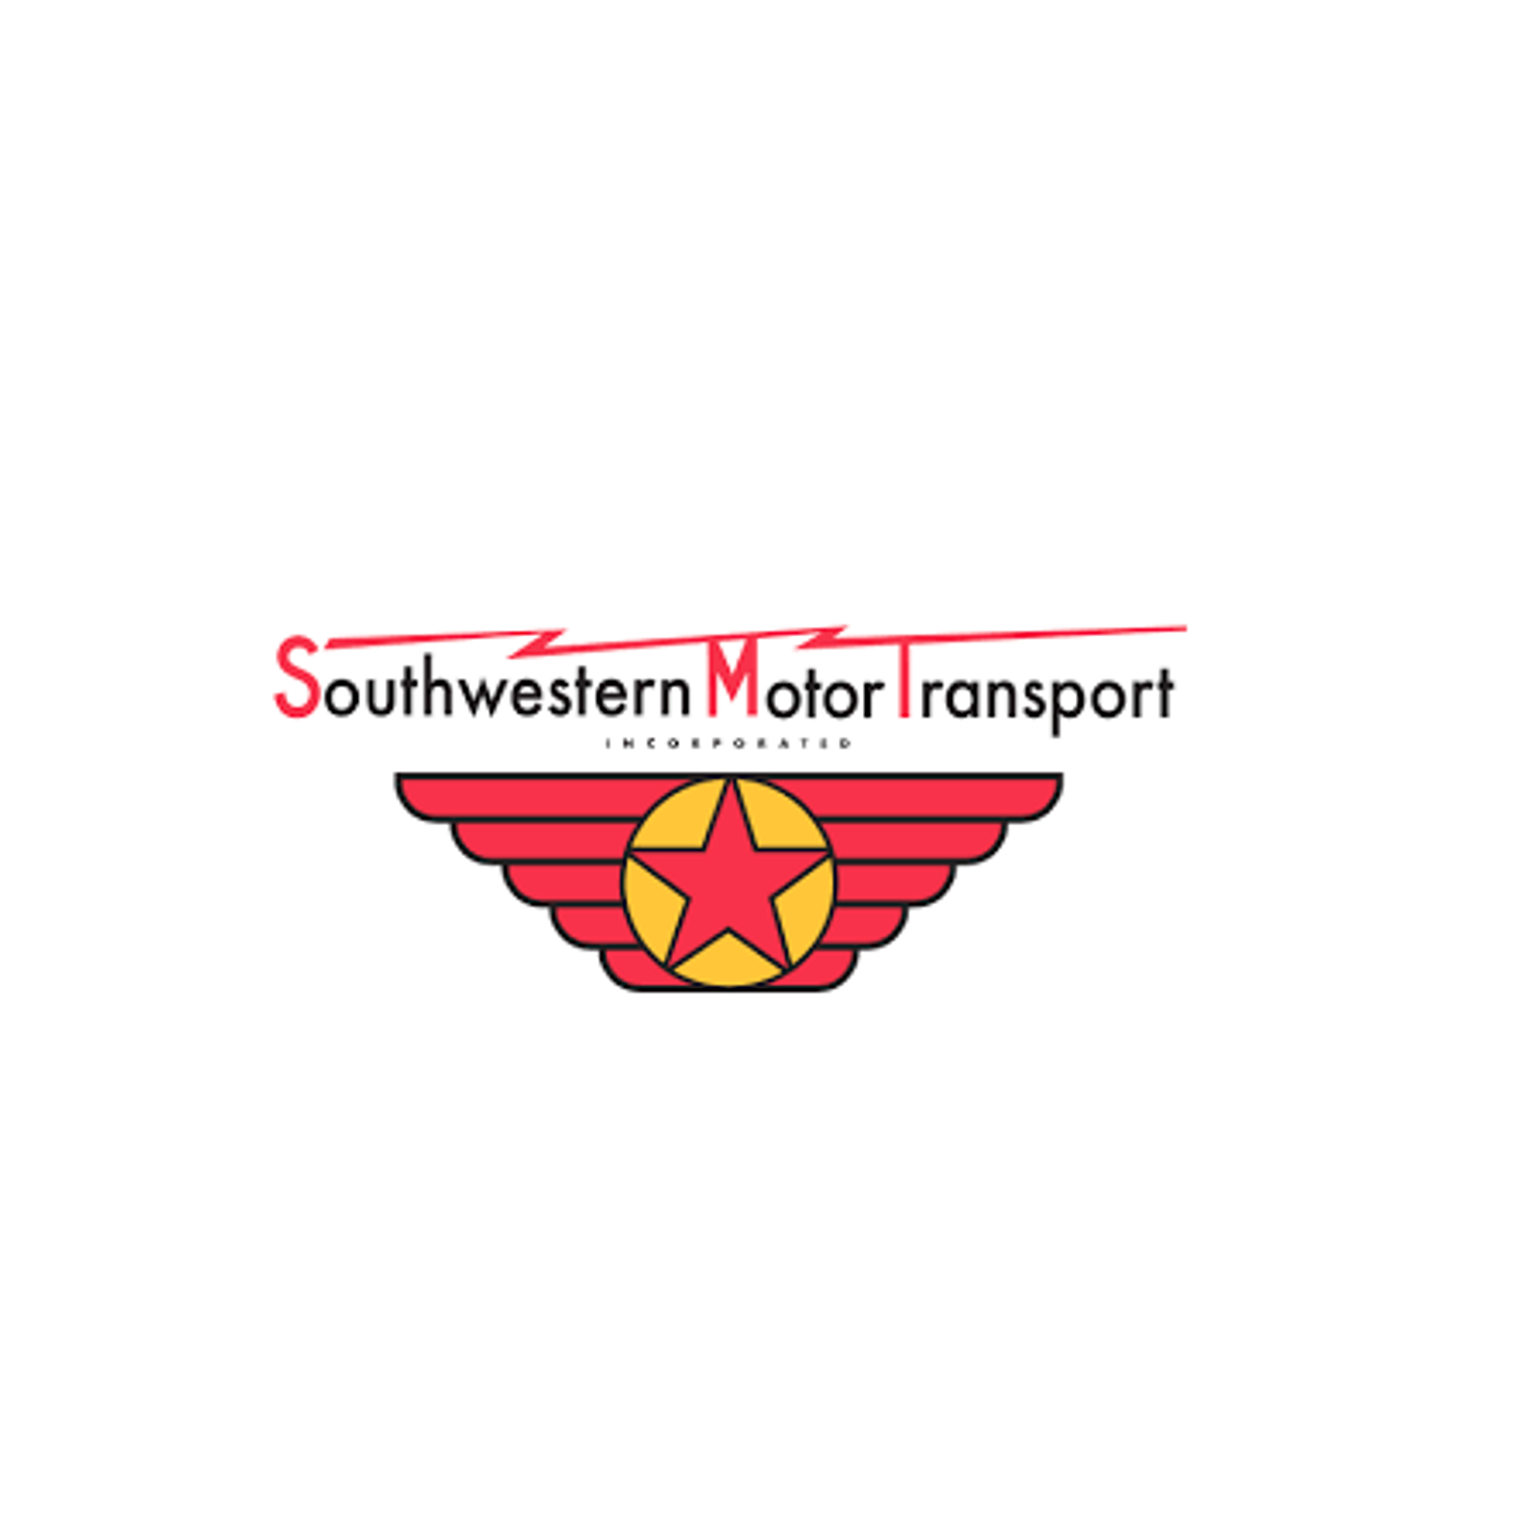 SouthwesternMotorTransport